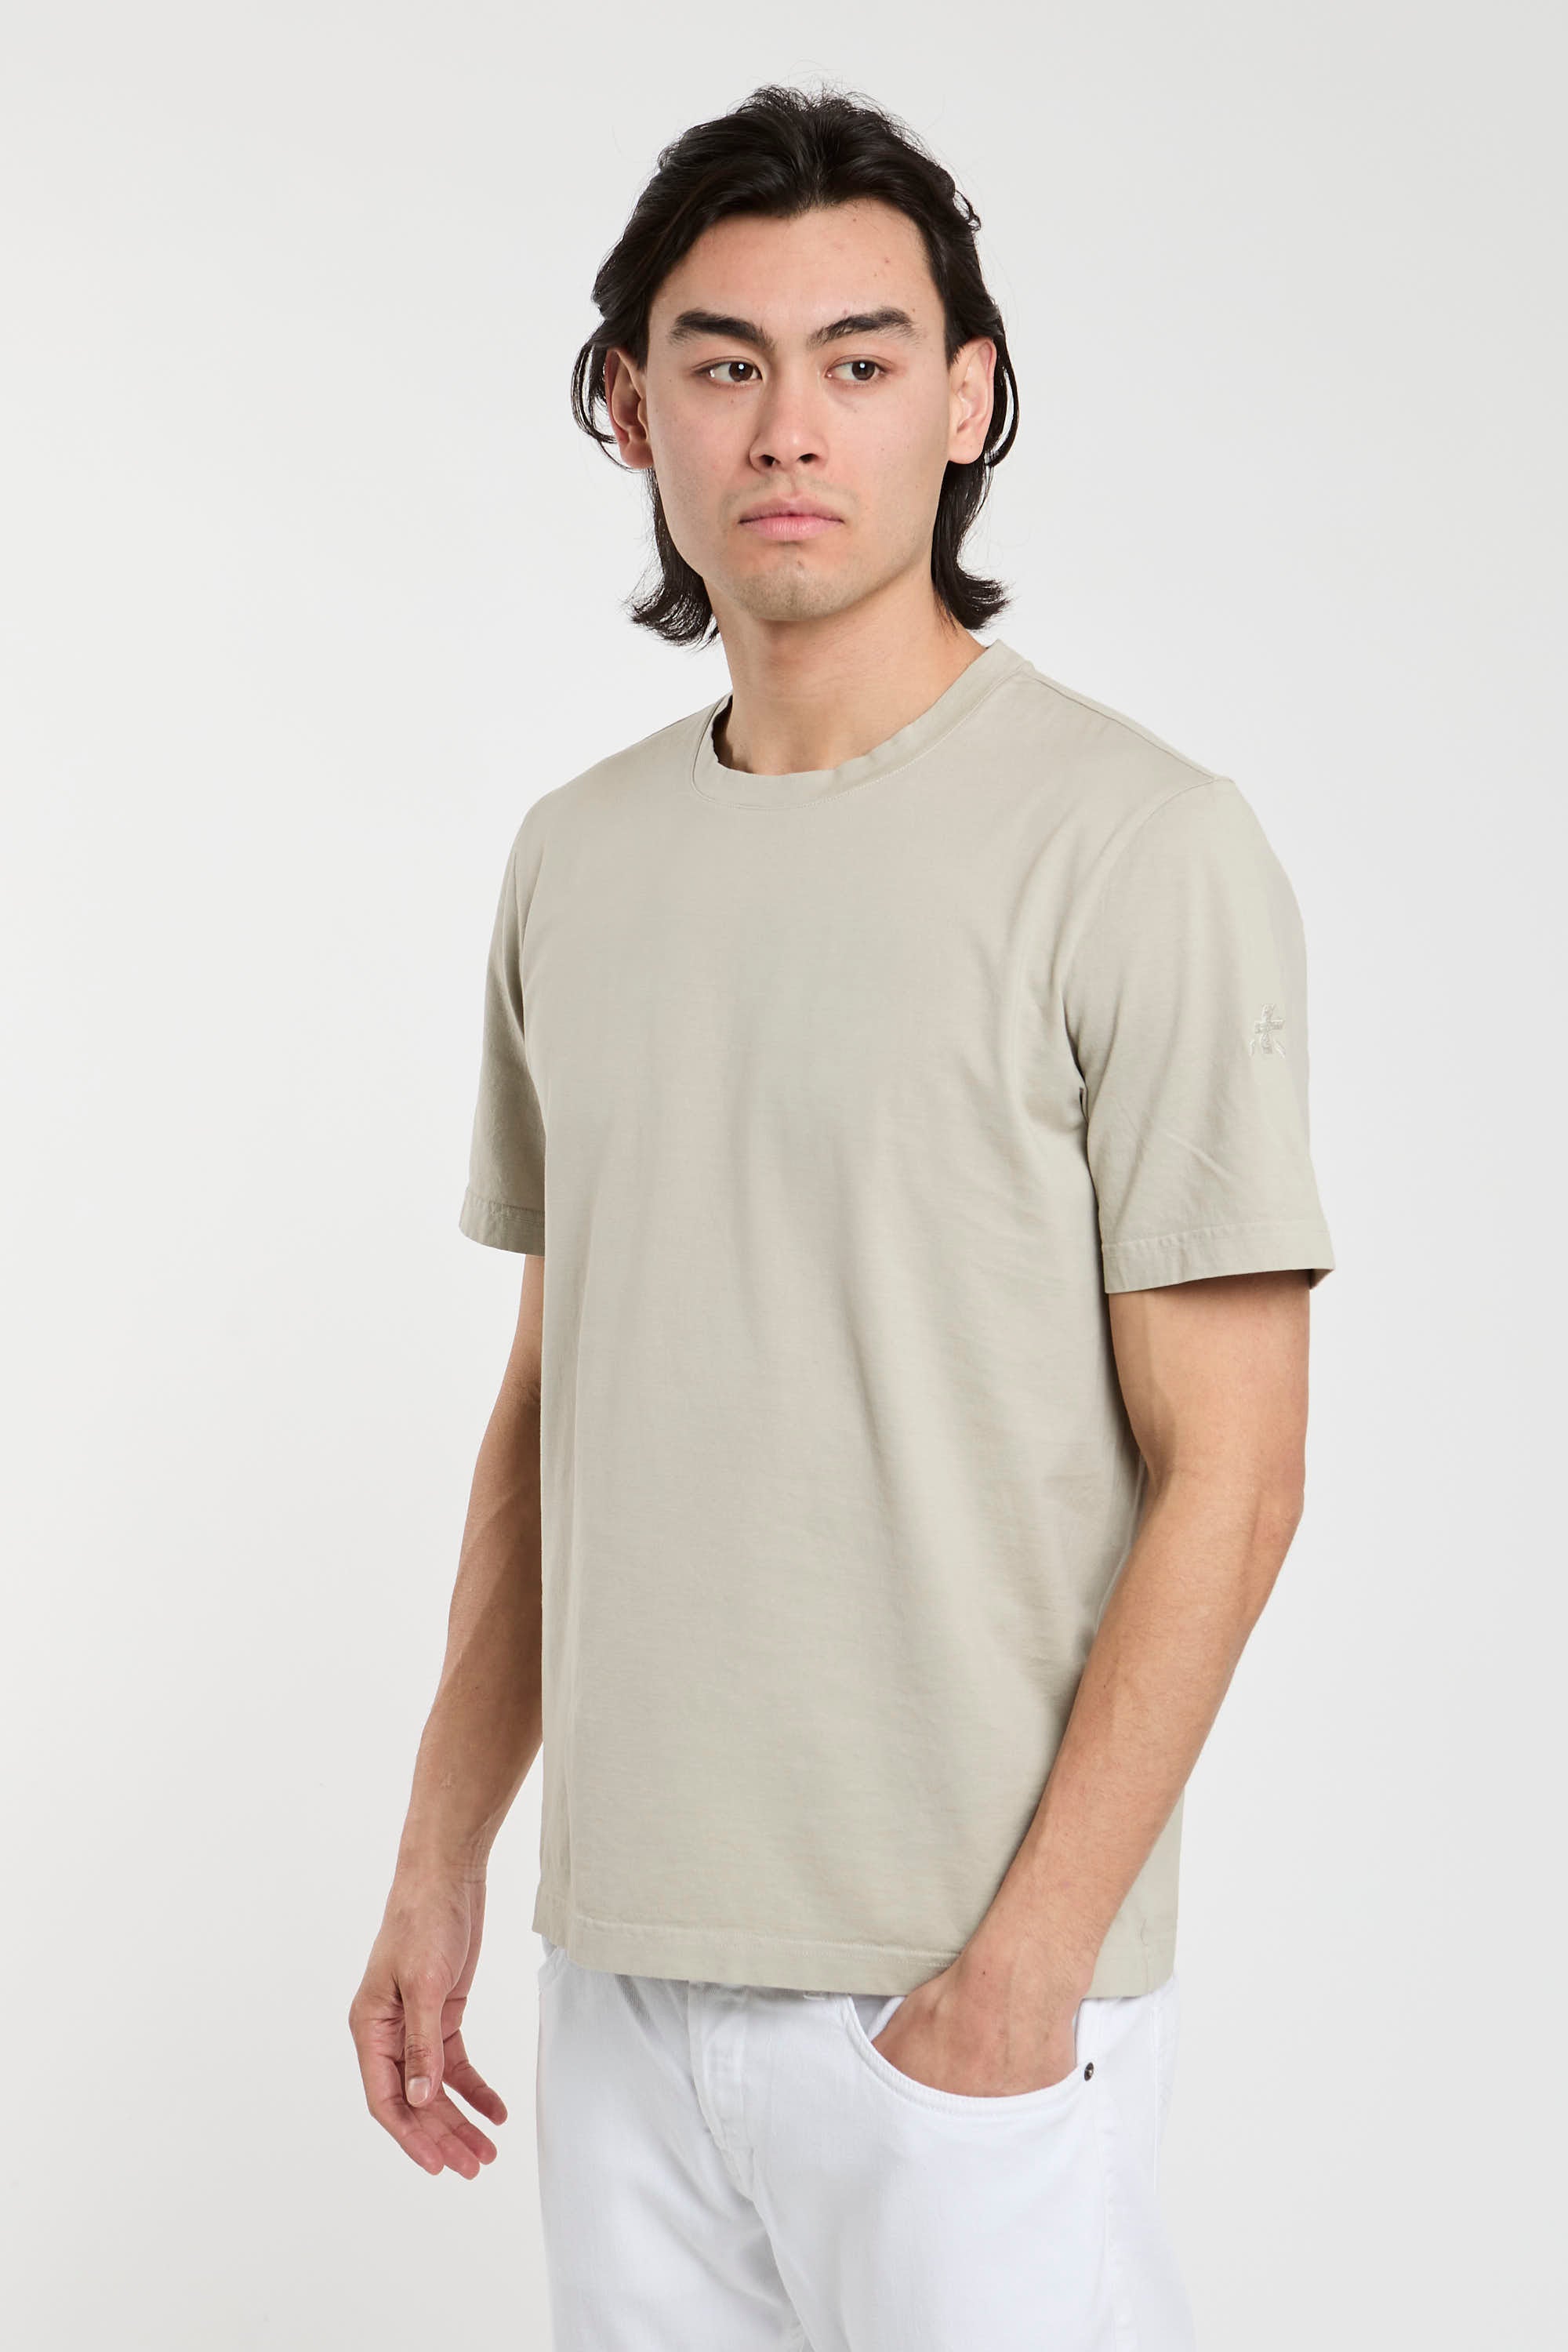 Premiata Cotton Jersey T-Shirt in Sand-1